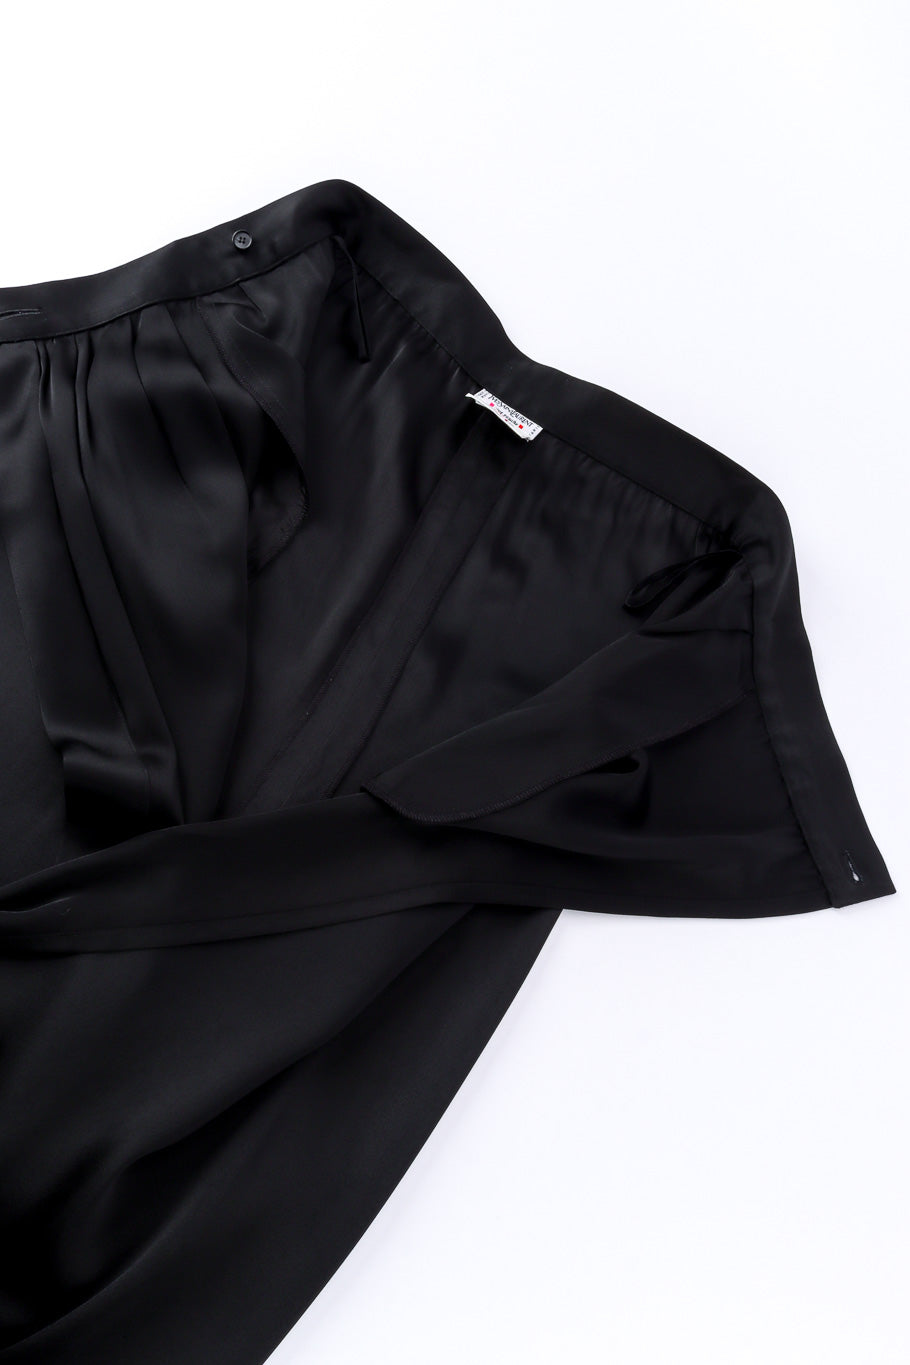 Vintage Yves Saint Laurent Wrap Midi Skirt view of lining @recessla